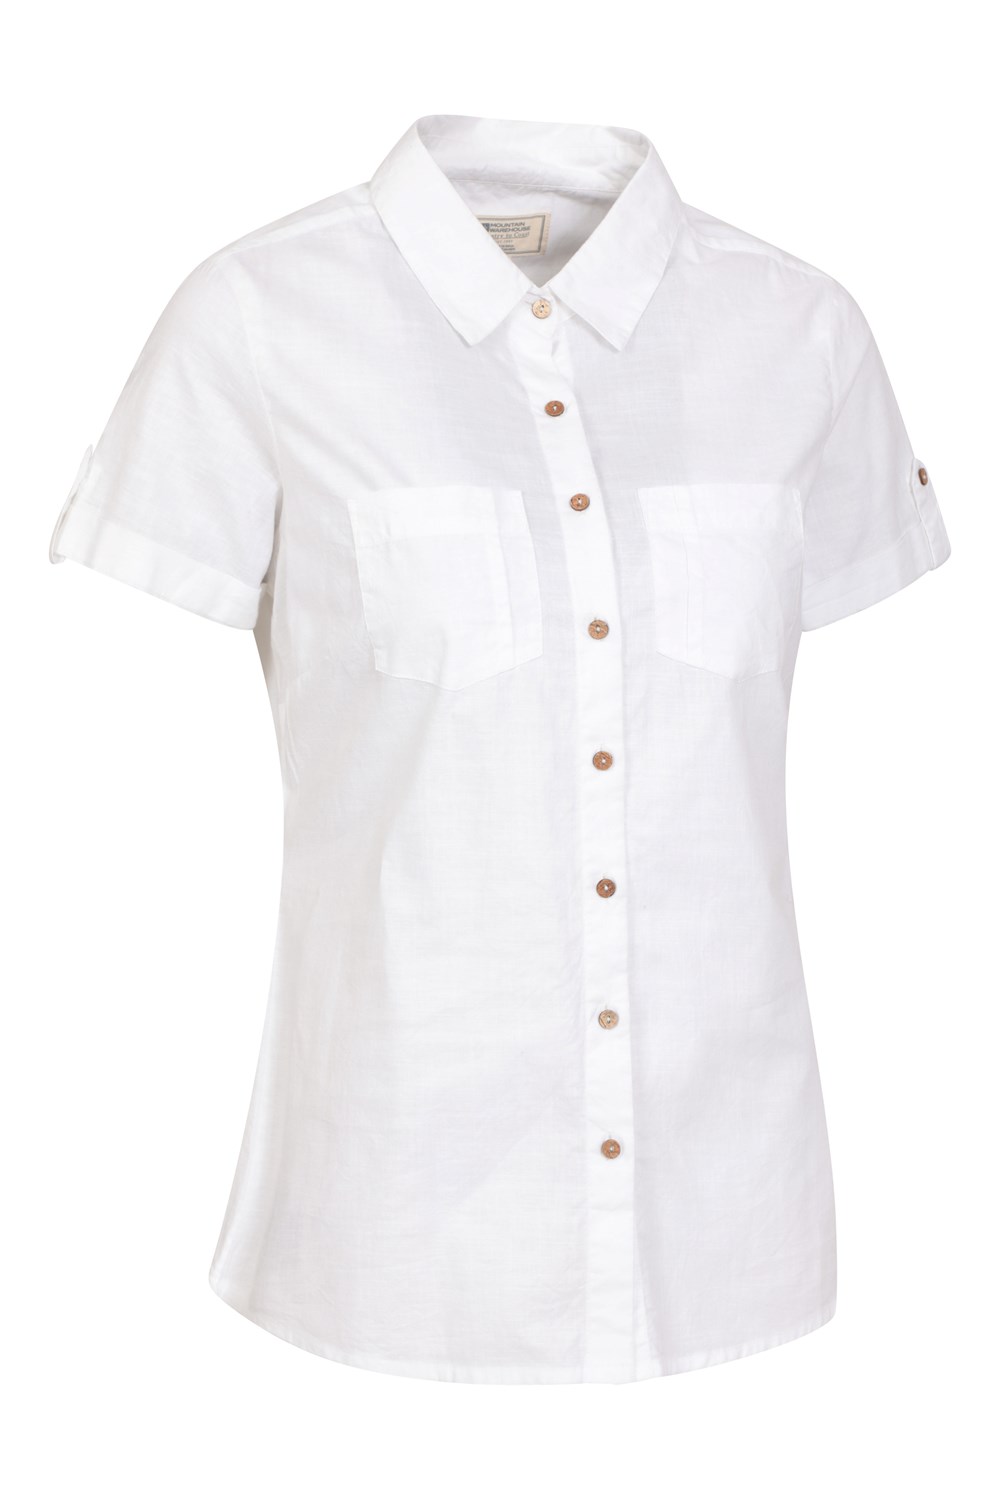 Mountain Warehouse Coconut Ladies Shirt 100% Cotton Short Sleeve Zipped ...